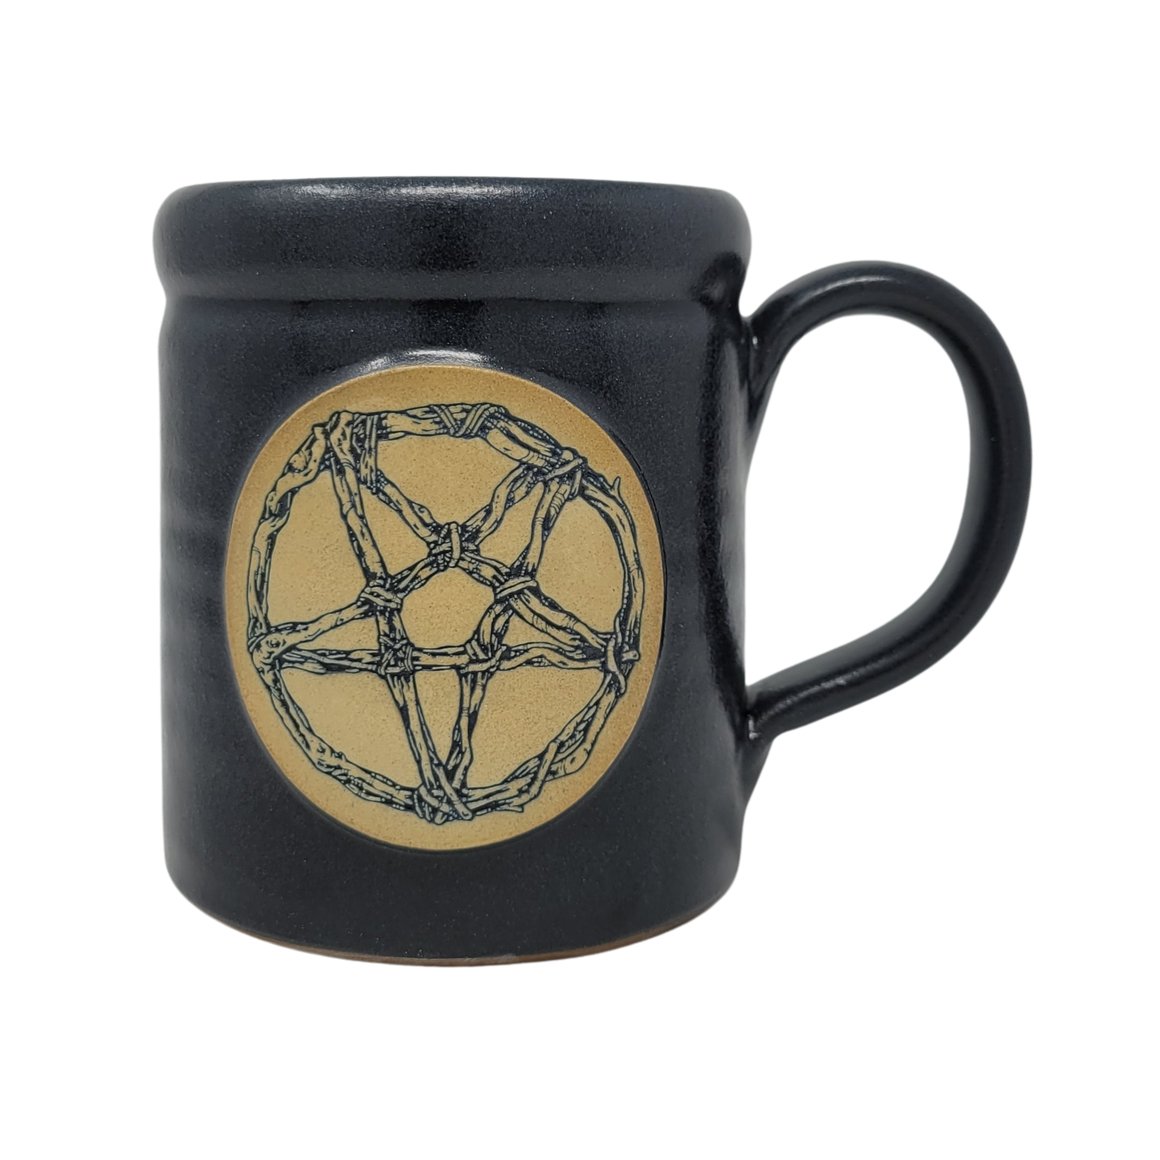 Pentagram Mug by Dellamorte & Co.